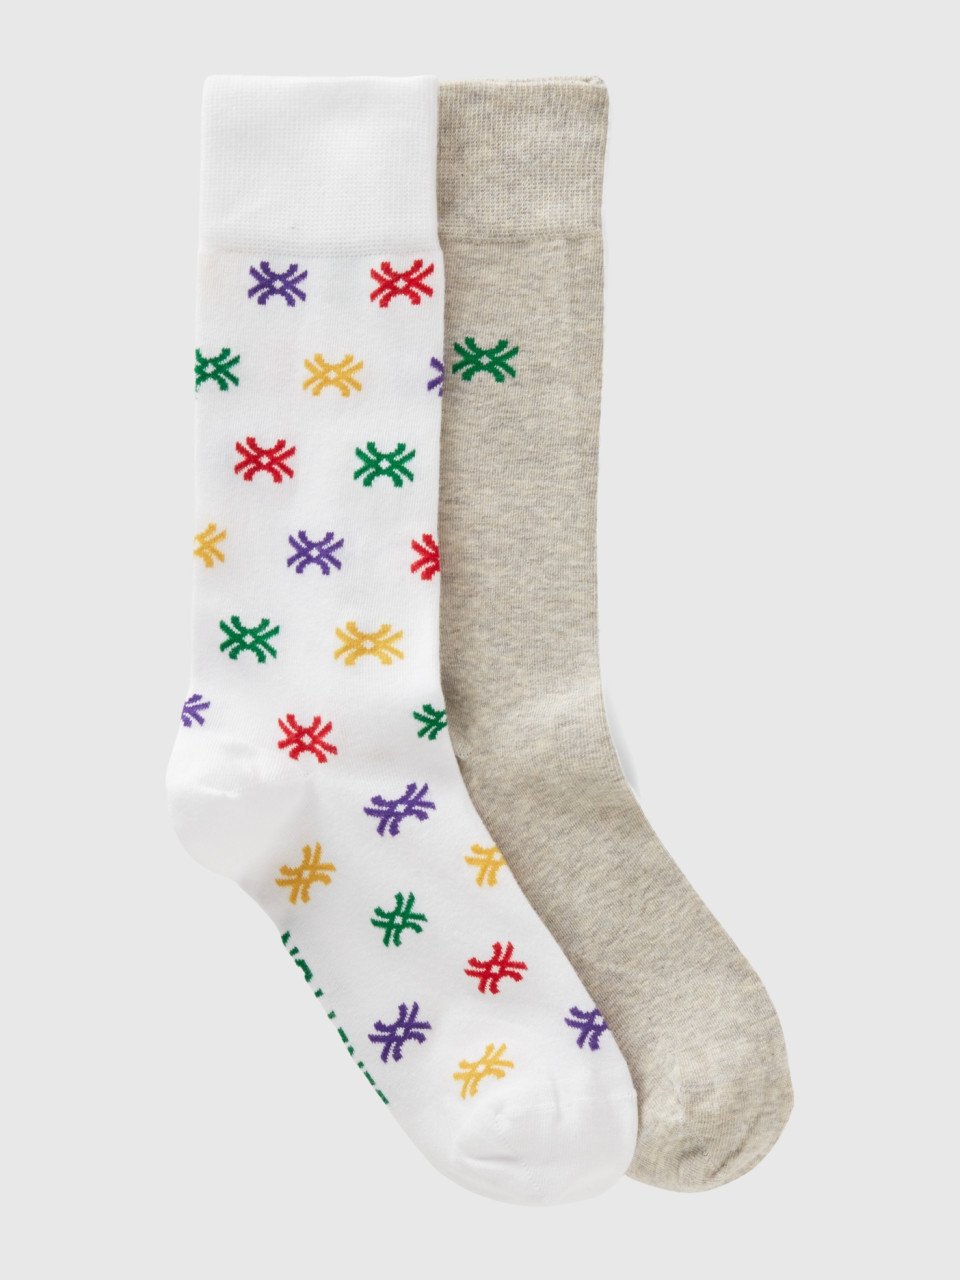 Benetton, Two Pairs Of White And Gray Socks, Gray, Women